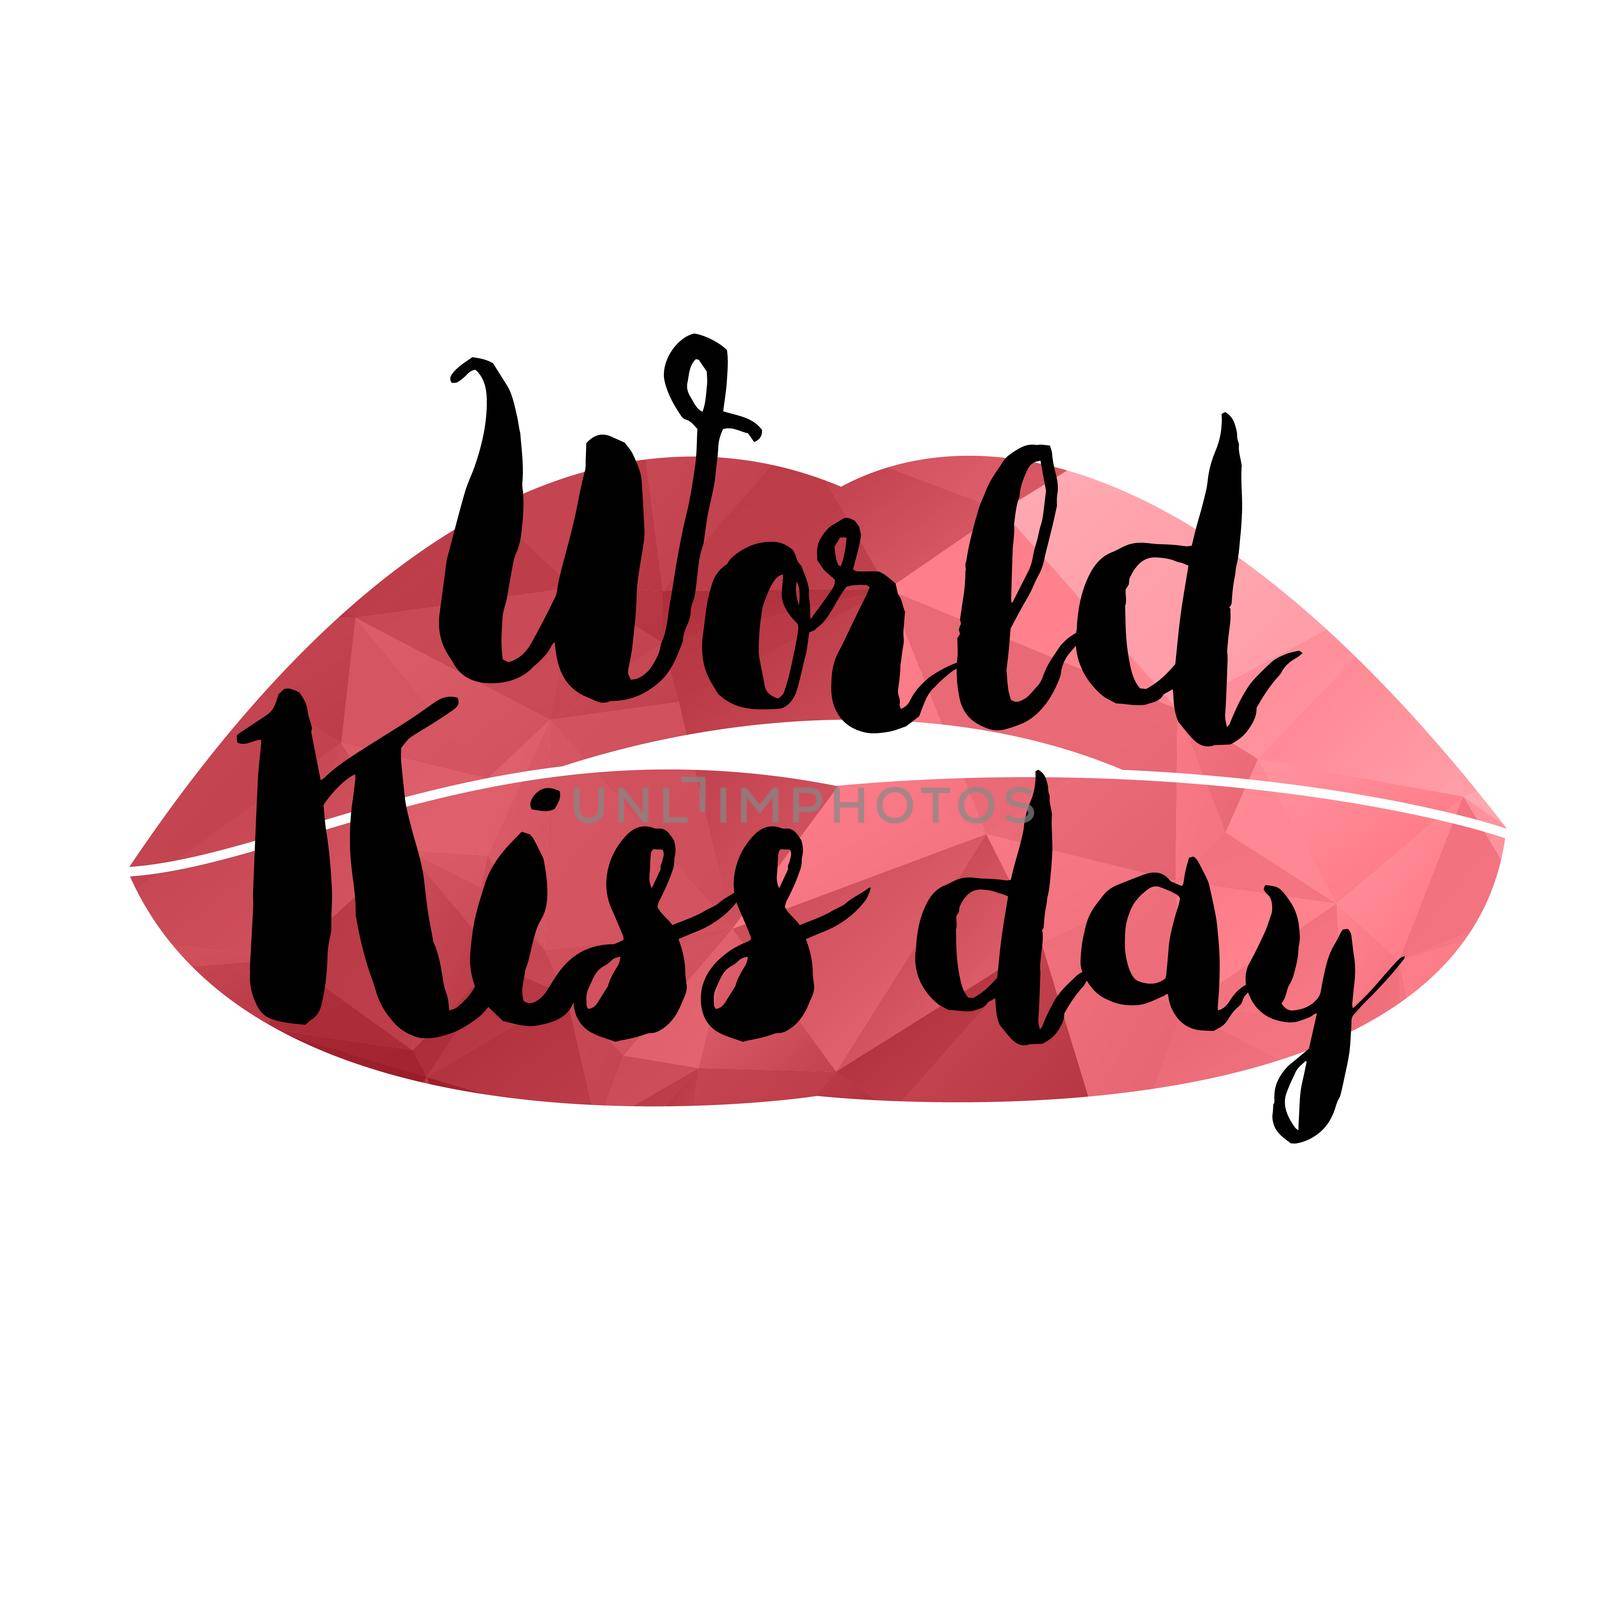 World Kiss Day by barsrsind